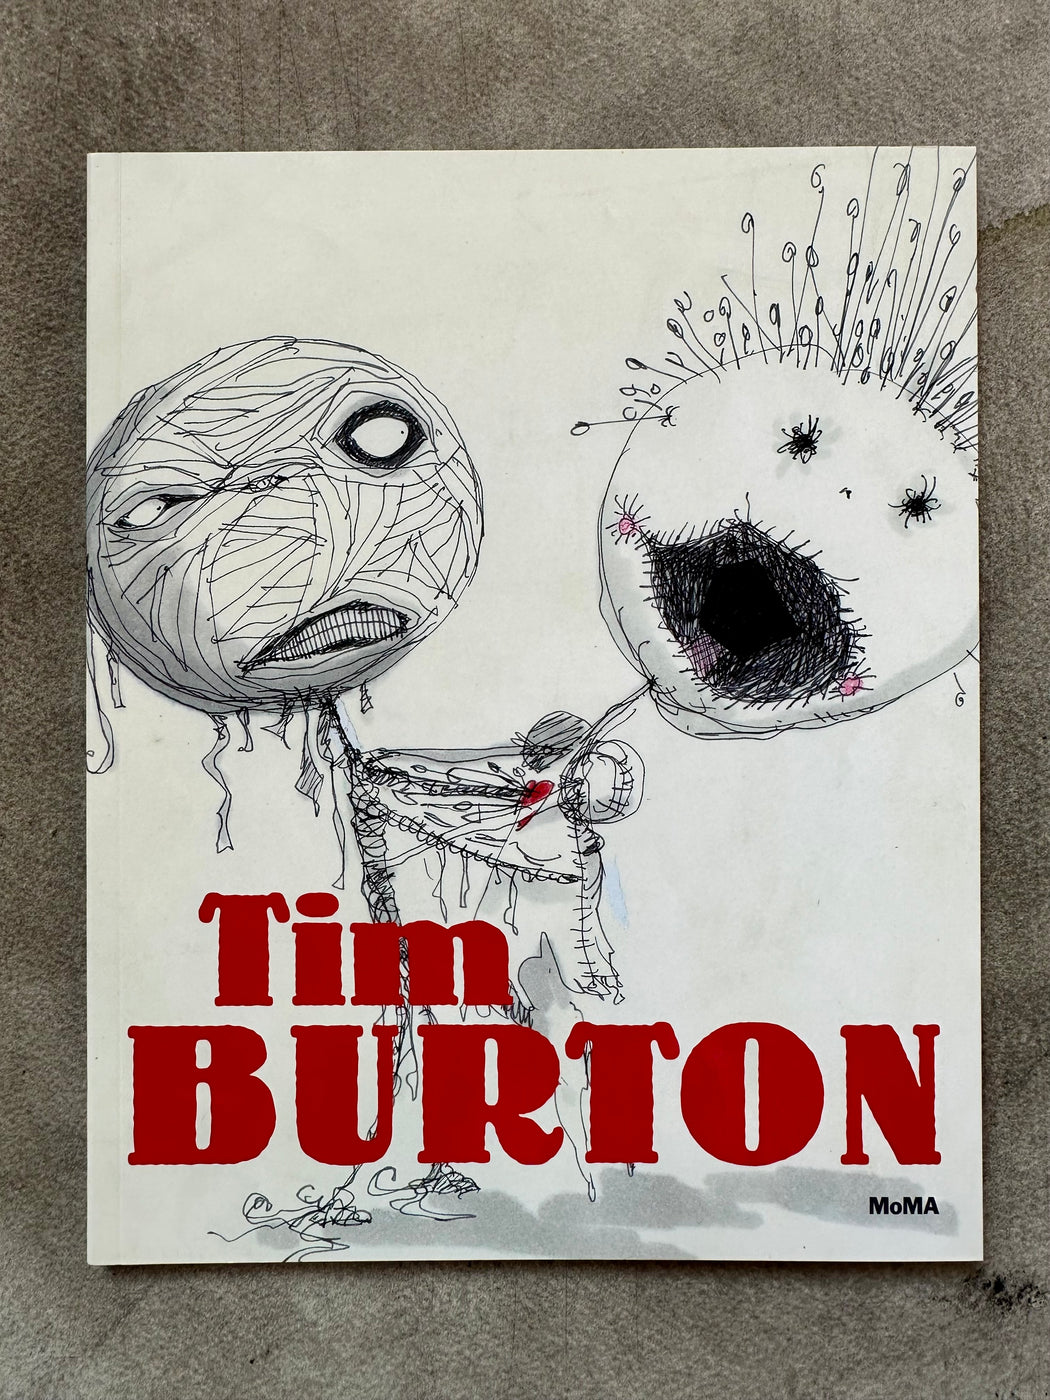 "Tim Burton" at The MoMa